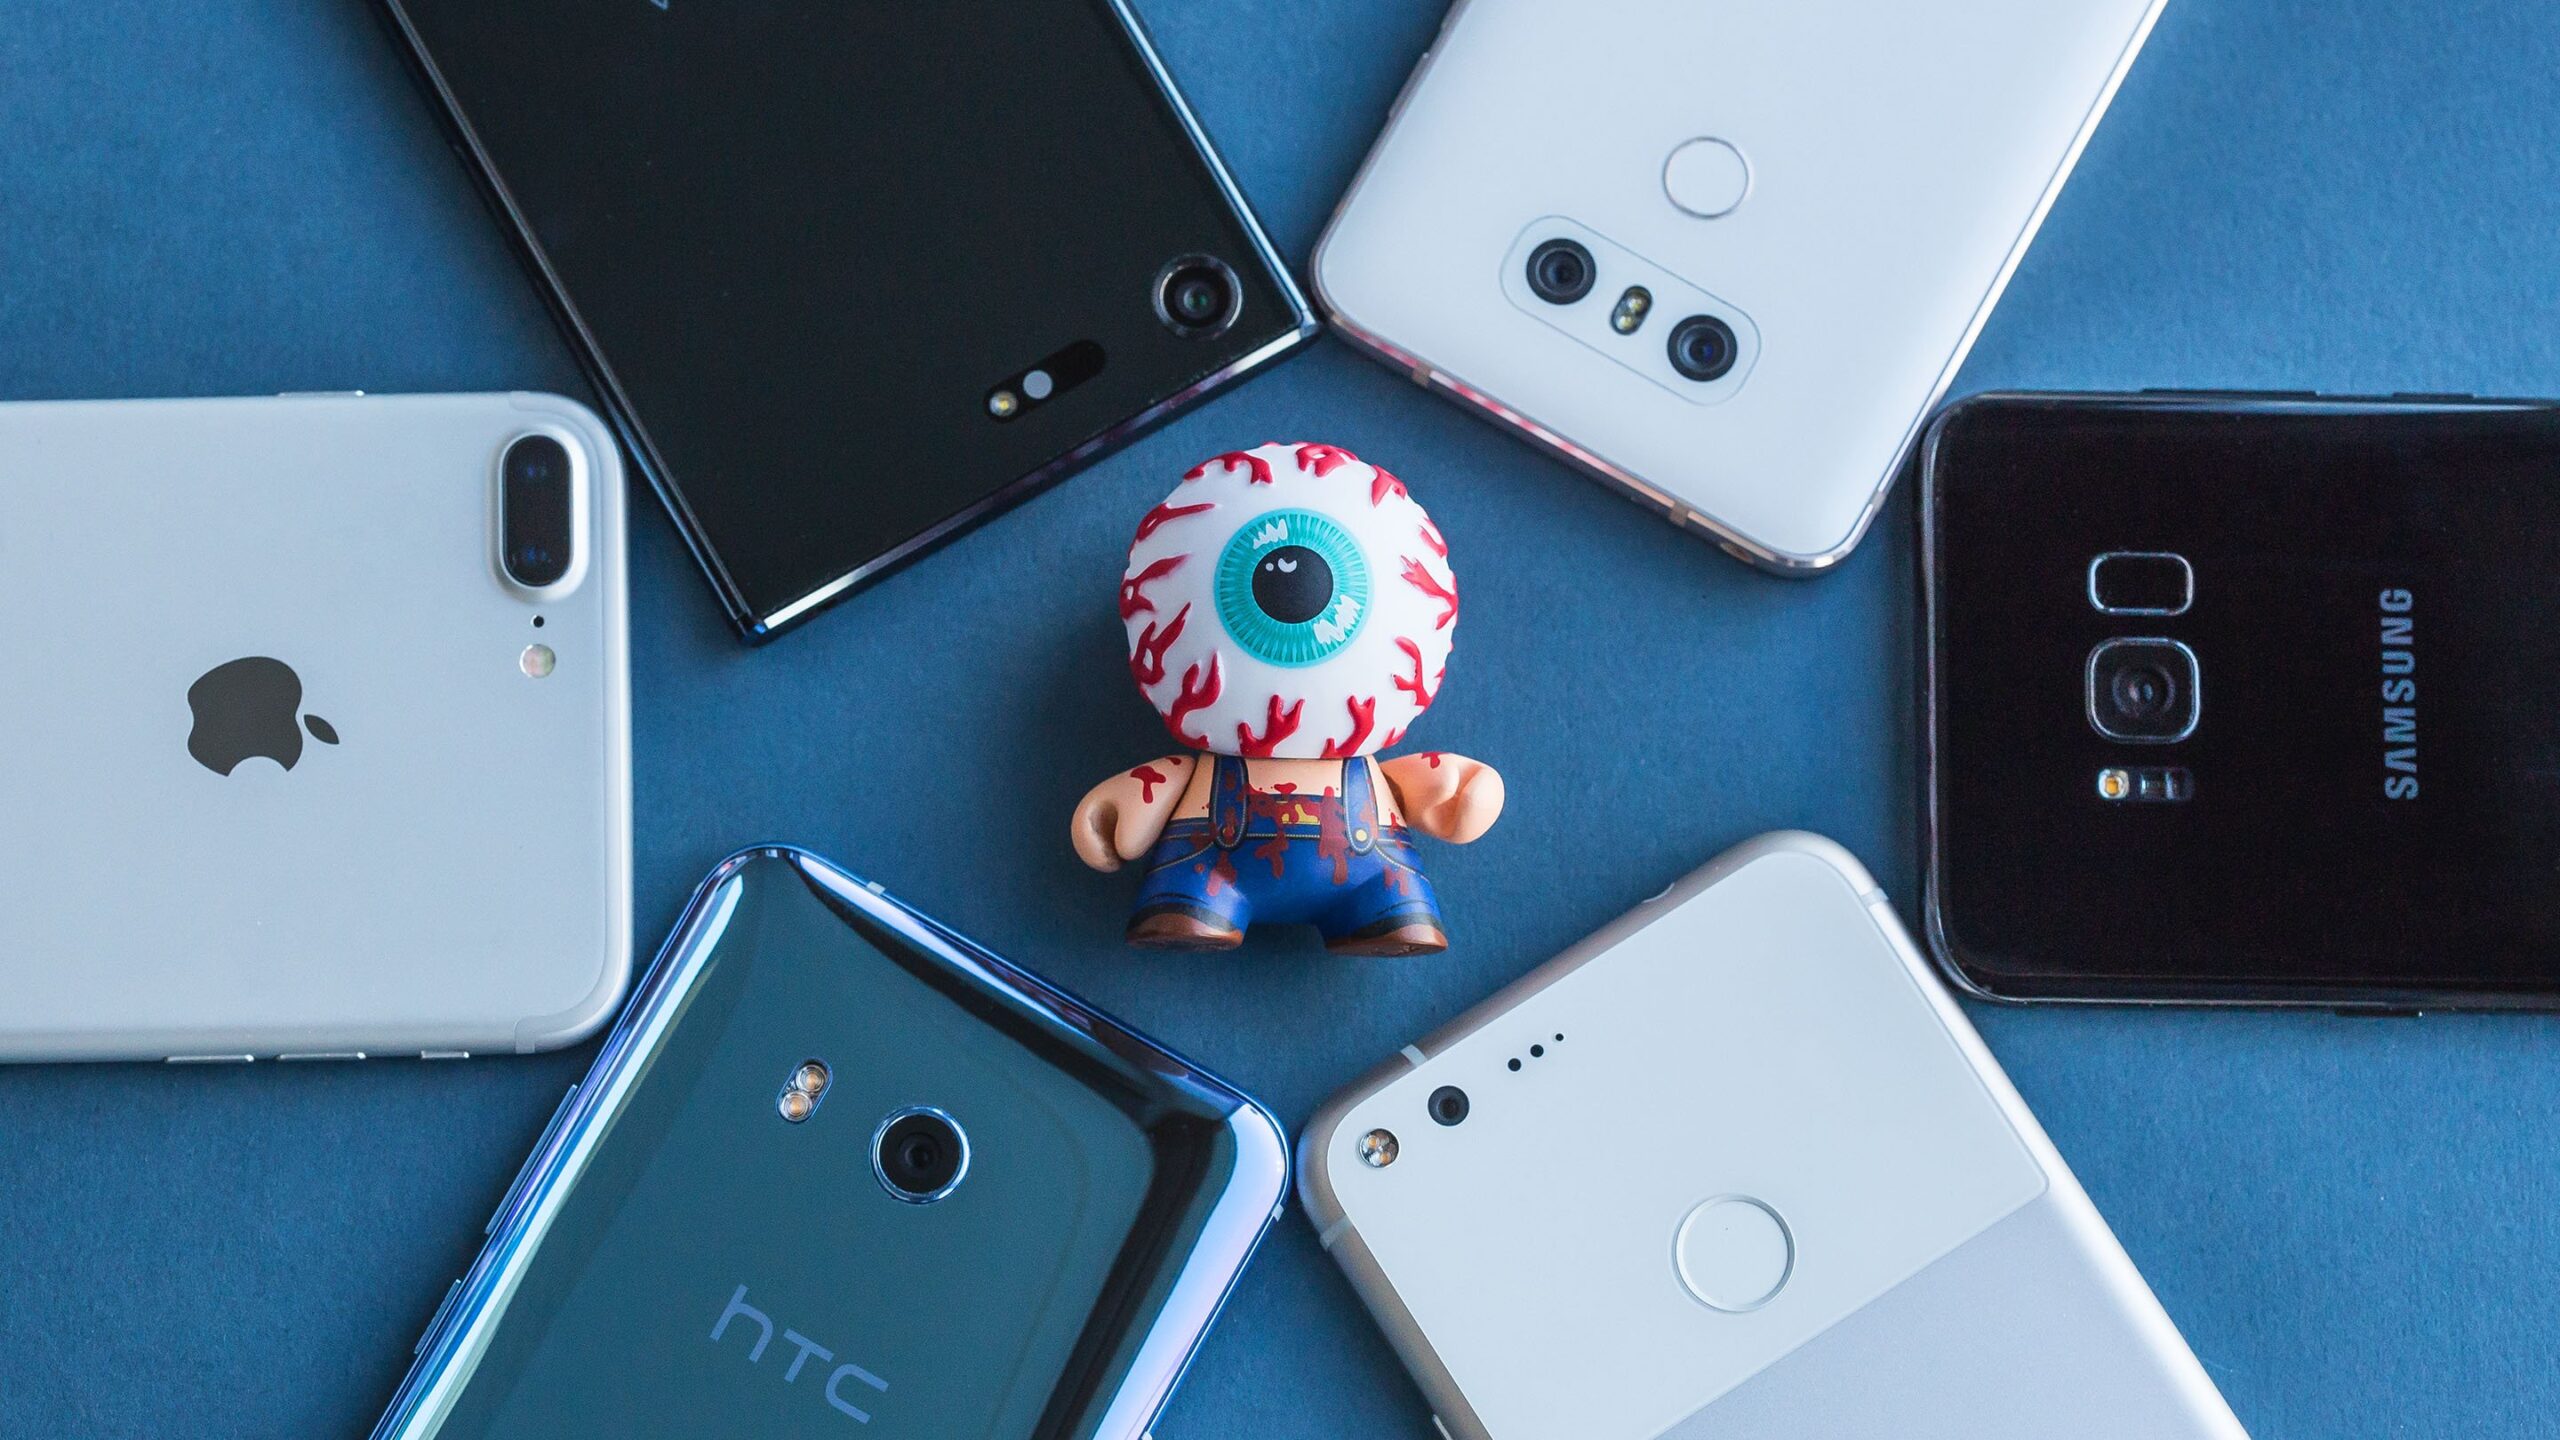 Camera test: XZ Premium, S8 +, HTC U11, G6, Pixel and iPhone 7 Plus